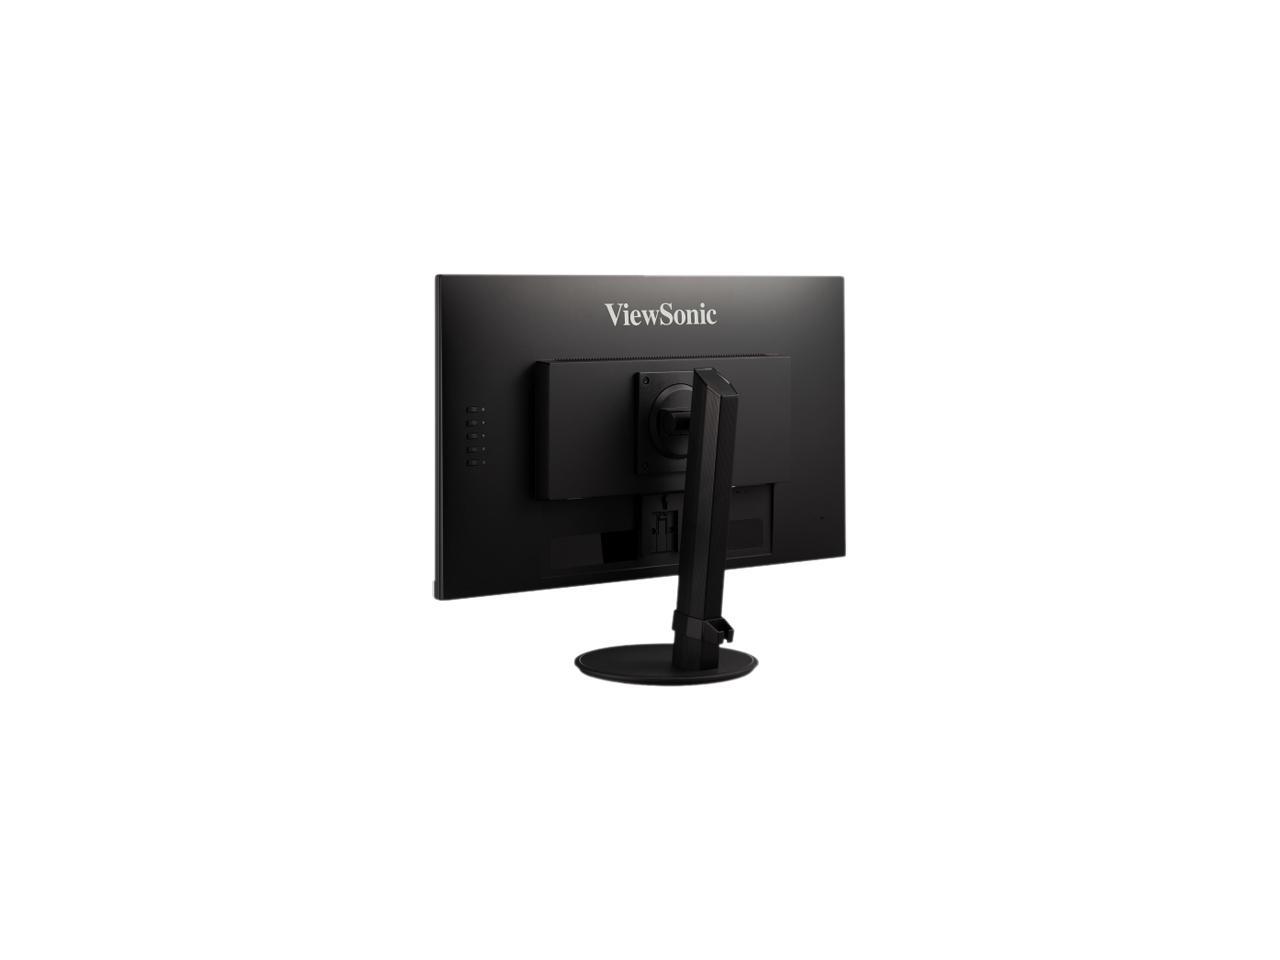 ViewSonic VA2447-MHJ 24 Inch Full HD 1080p Monitor with Advanced